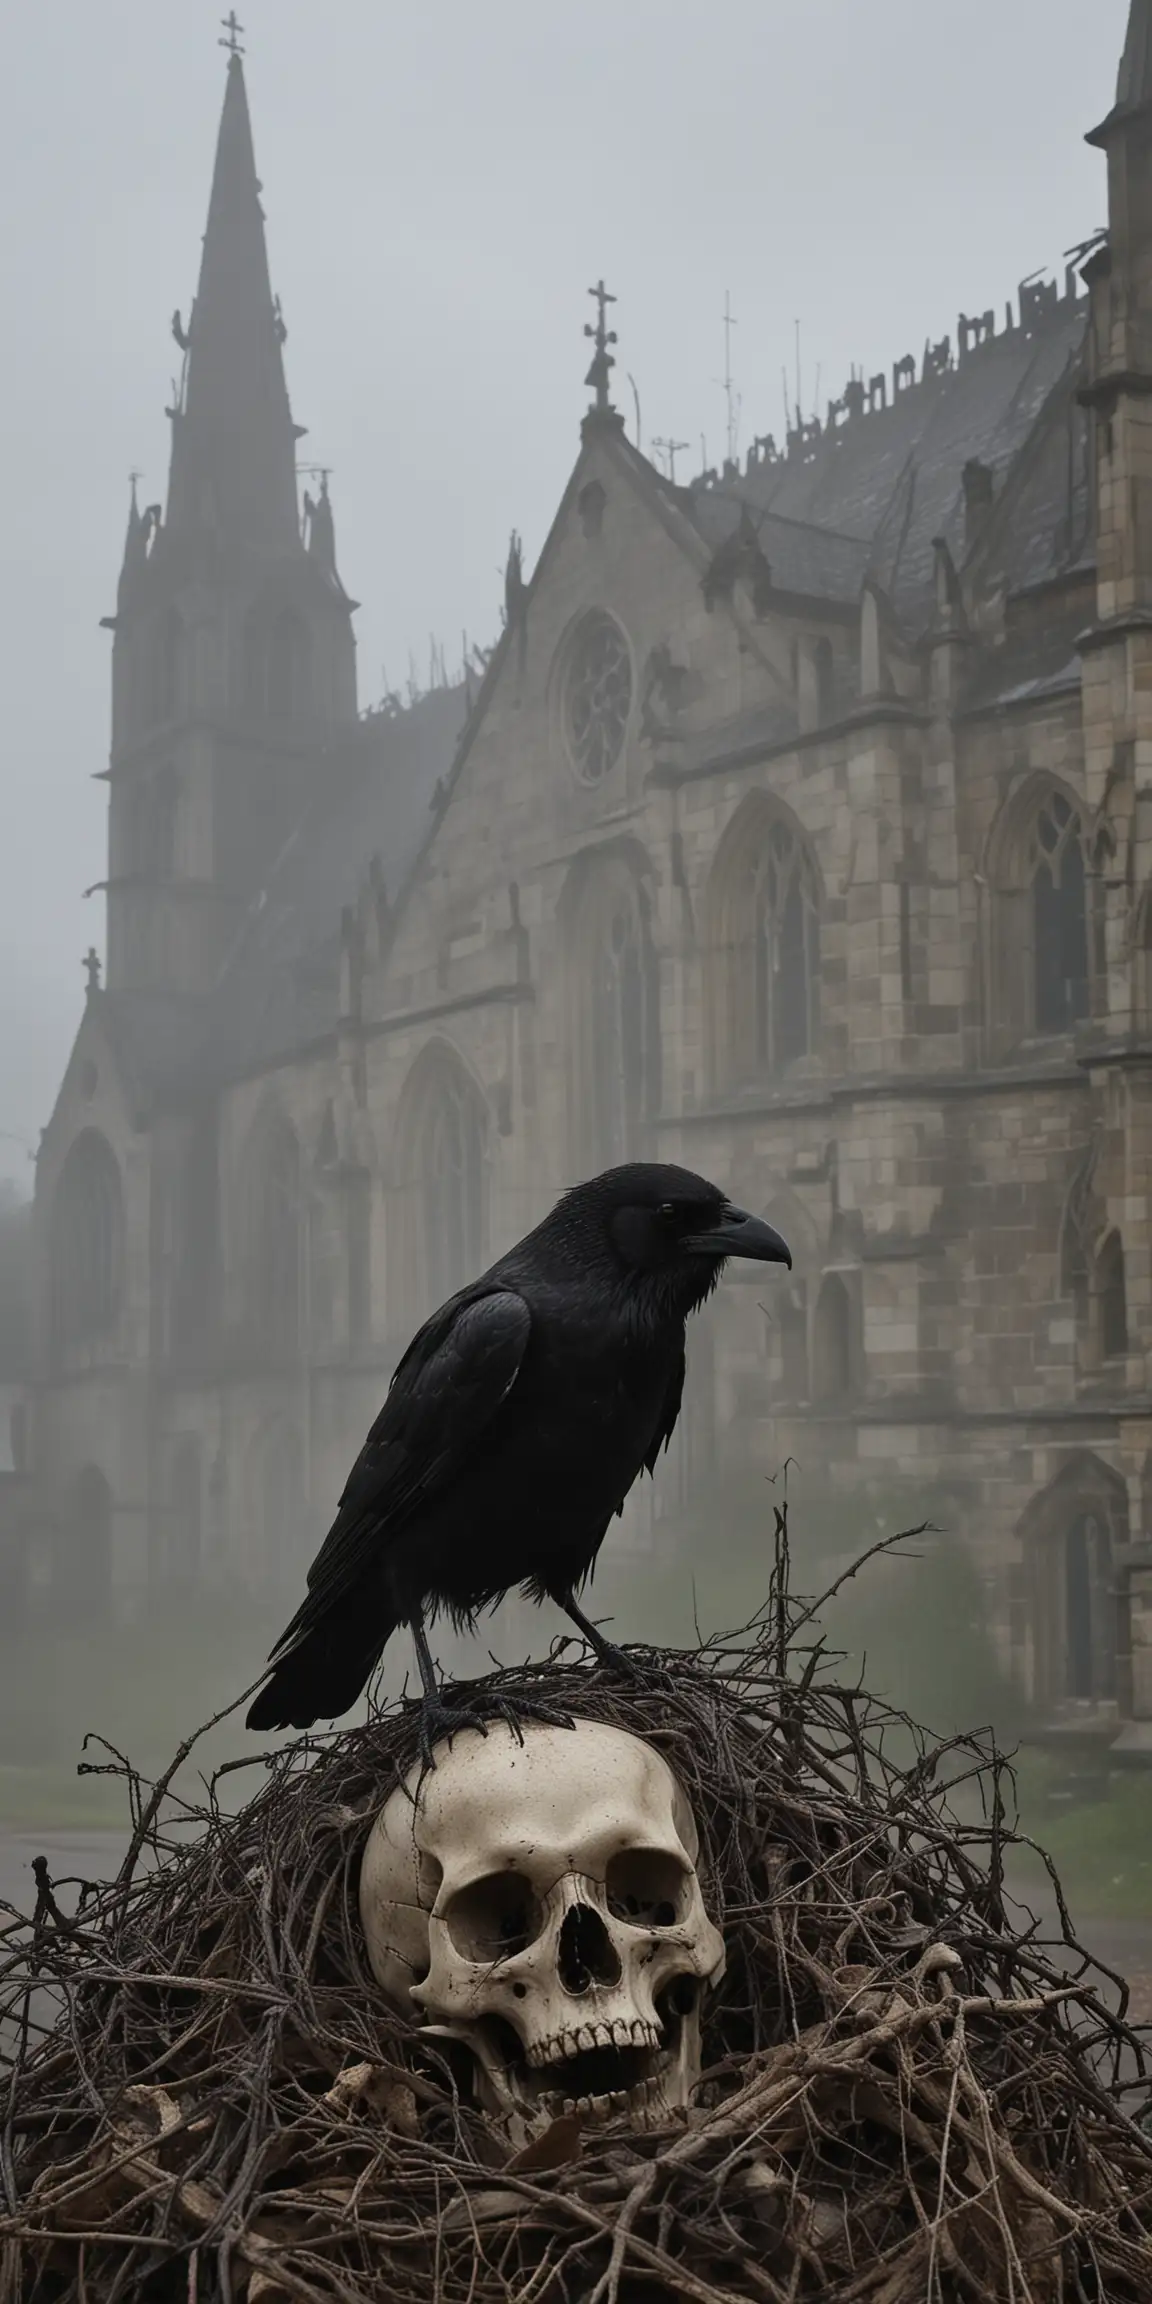 Crow on skull, dusty, cobwebs, gothic, church, derelict, rain, misty, storm 